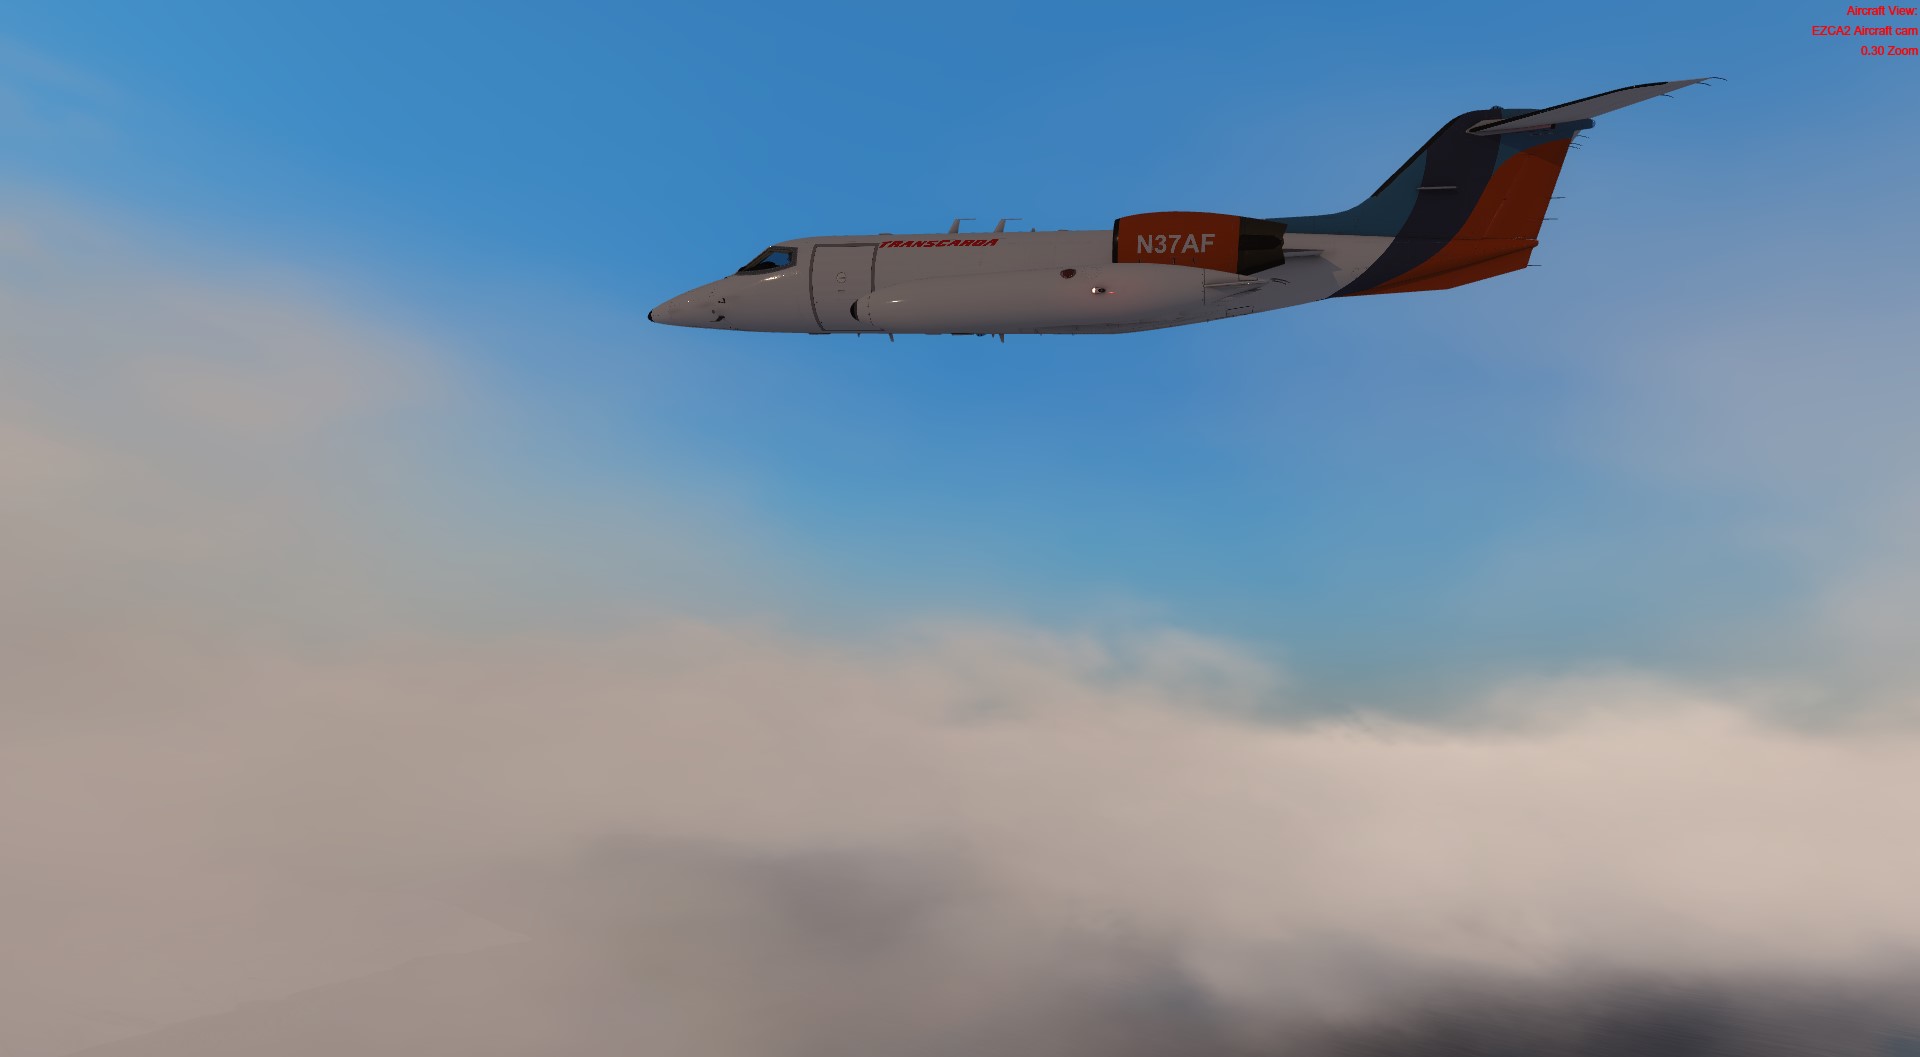 Flysimware – Learjet 35A 评测与冰岛送货之旅-2859 